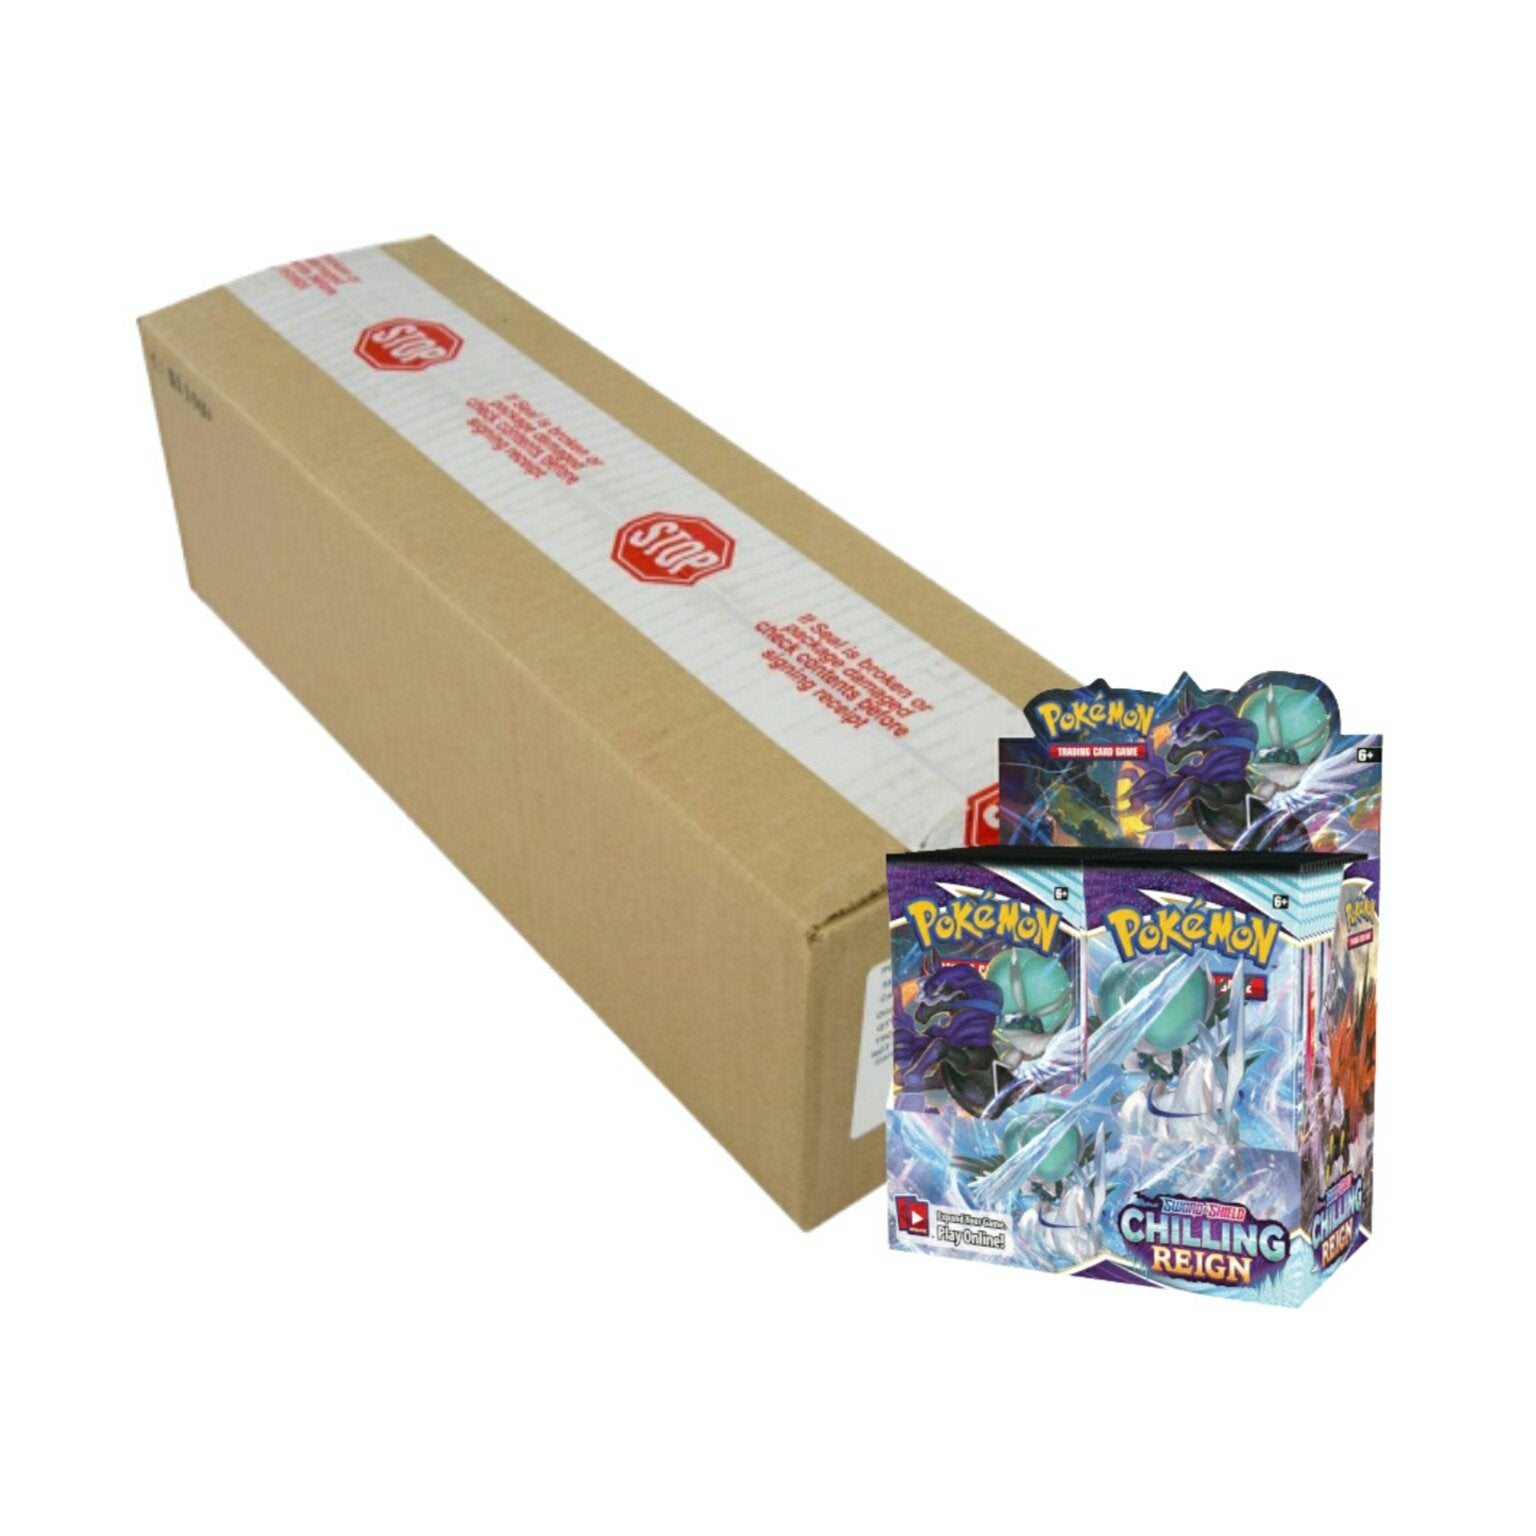 Pokemon Sword & Shield Chilling Reign Booster Box Case (Case of 6 Boxes) - Miraj Trading